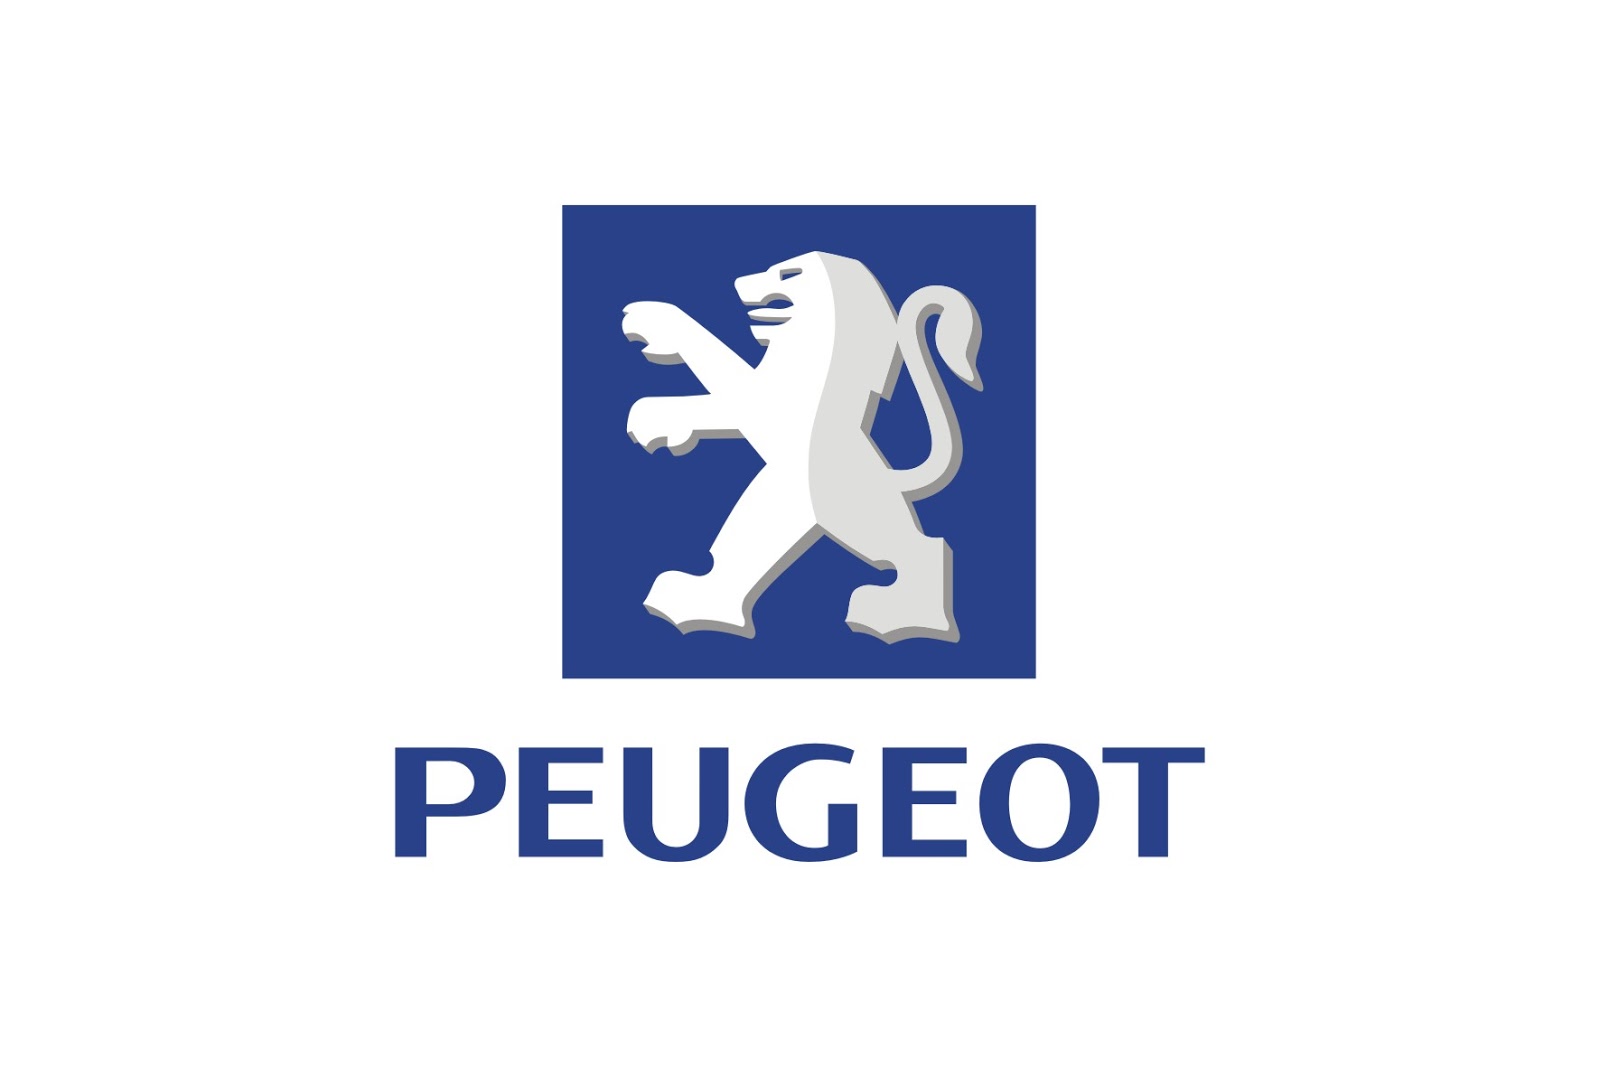  Peugeot Logo 